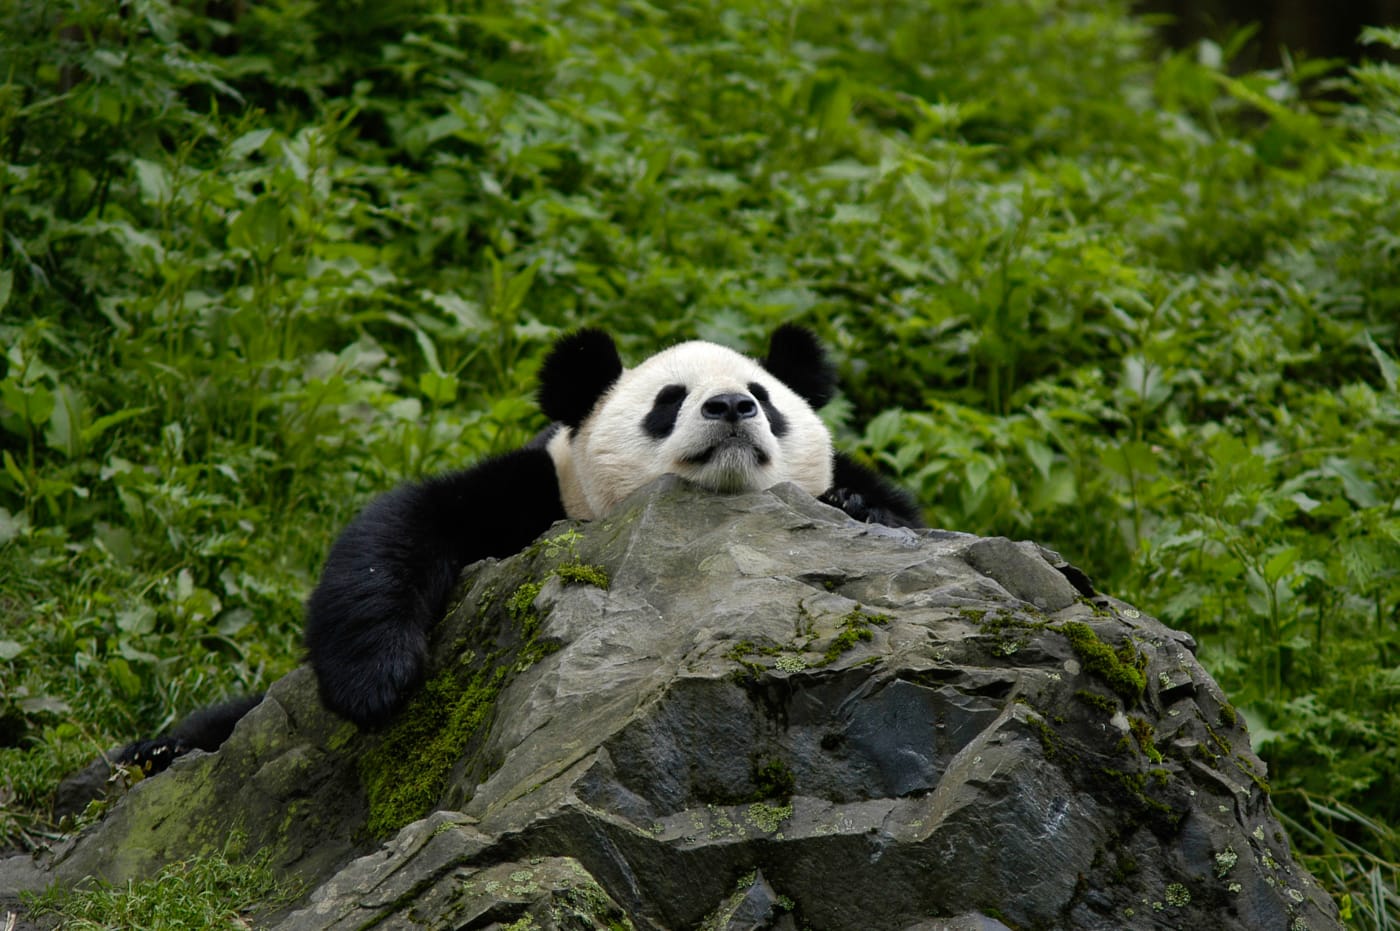 Giant panda resting, Panda Breeding Centre, Wolong Panda Reserve, Sichuan Province, China.